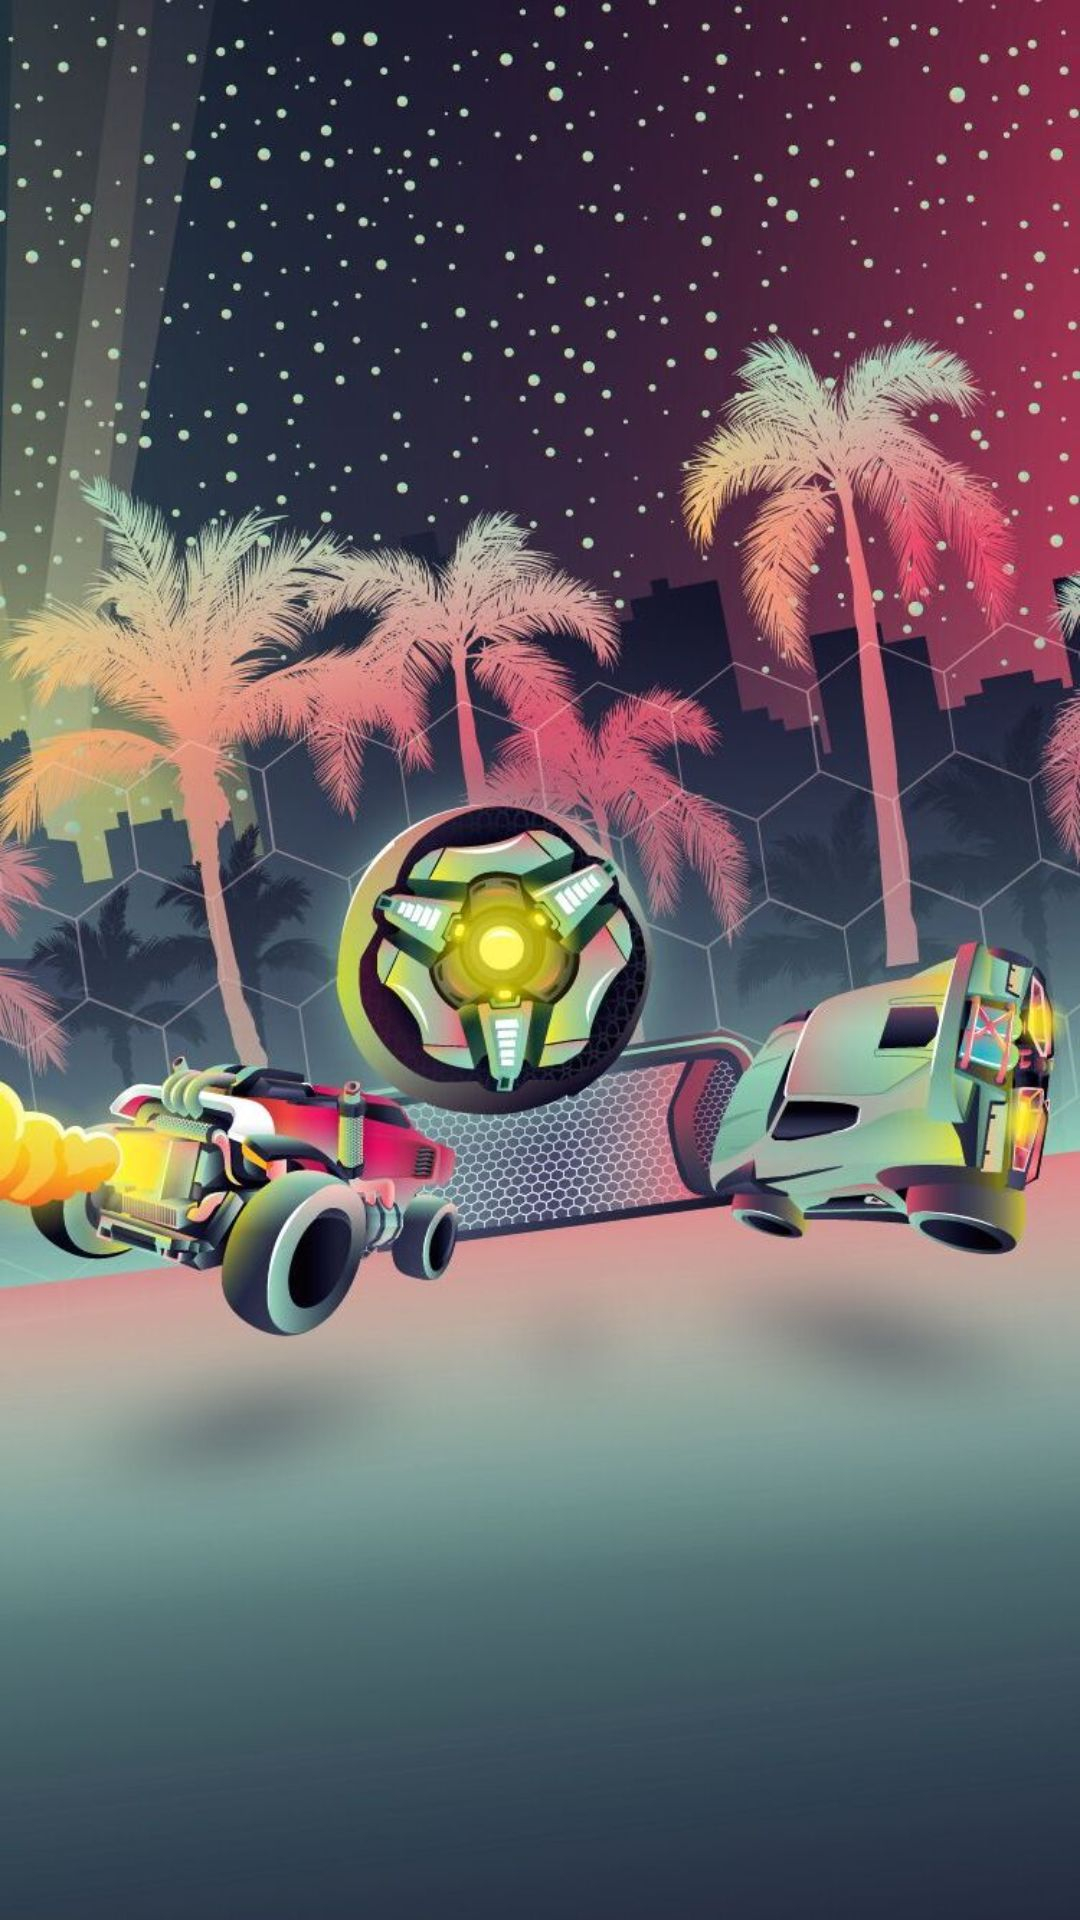 1080x1920 Rocket League Wallpapers Top 25 Best Rocket League Backgrounds Download